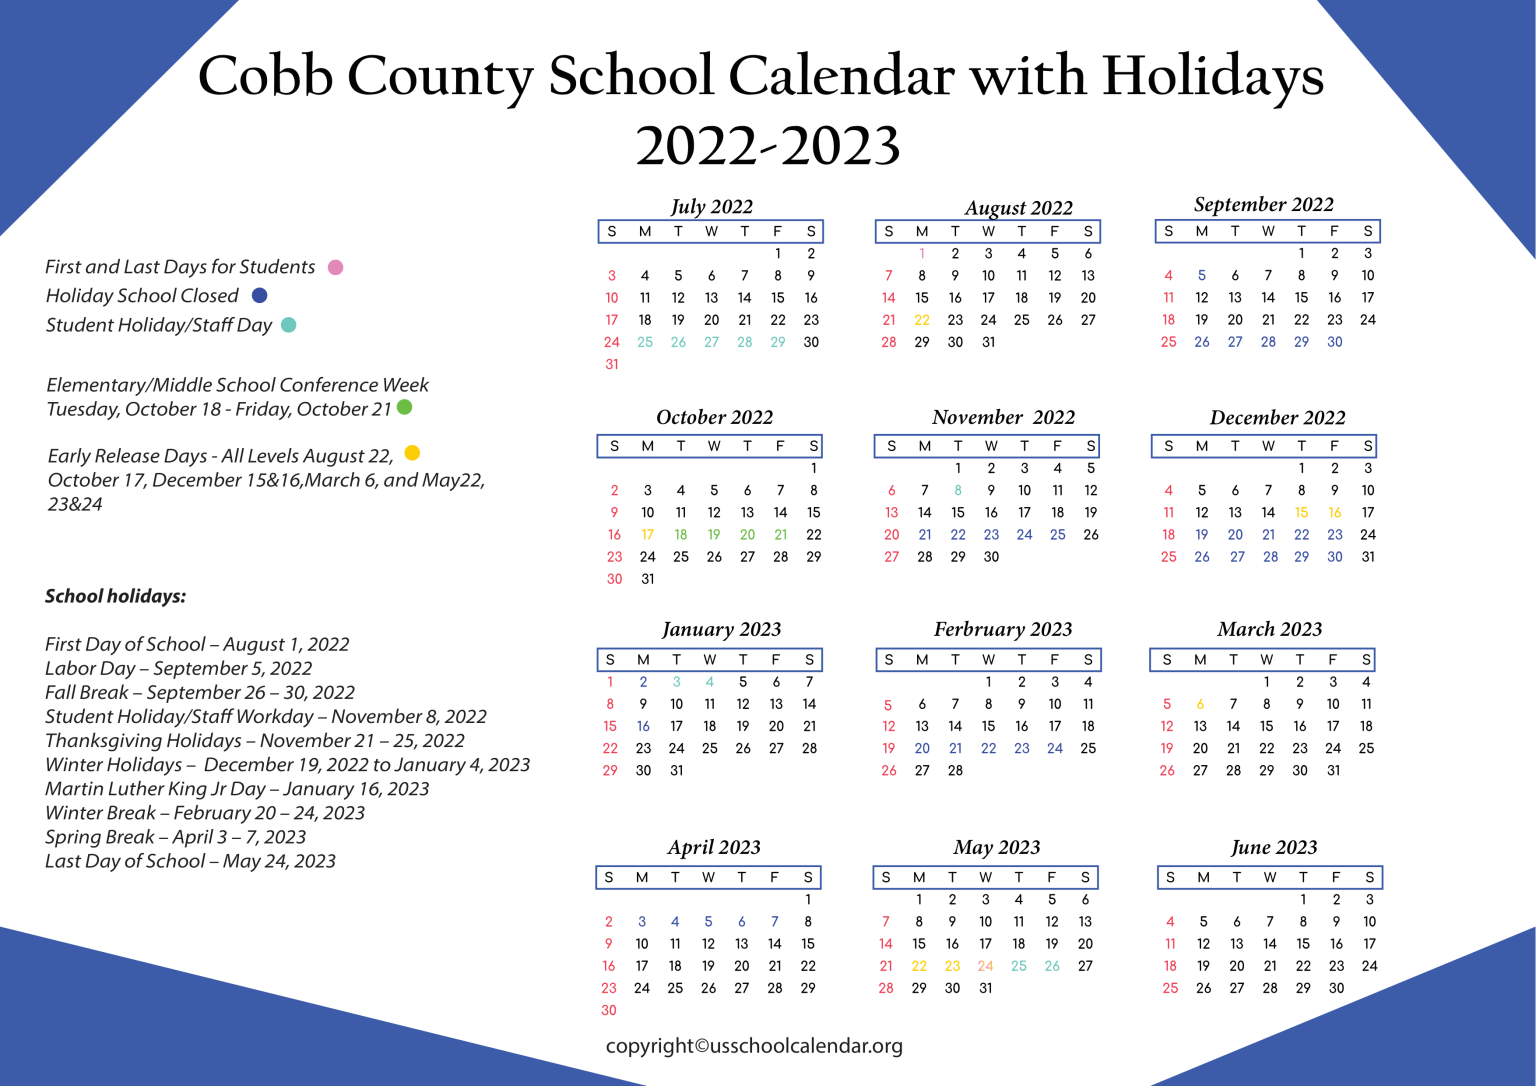 Cobb County School Calendar 2023 US School Calendar